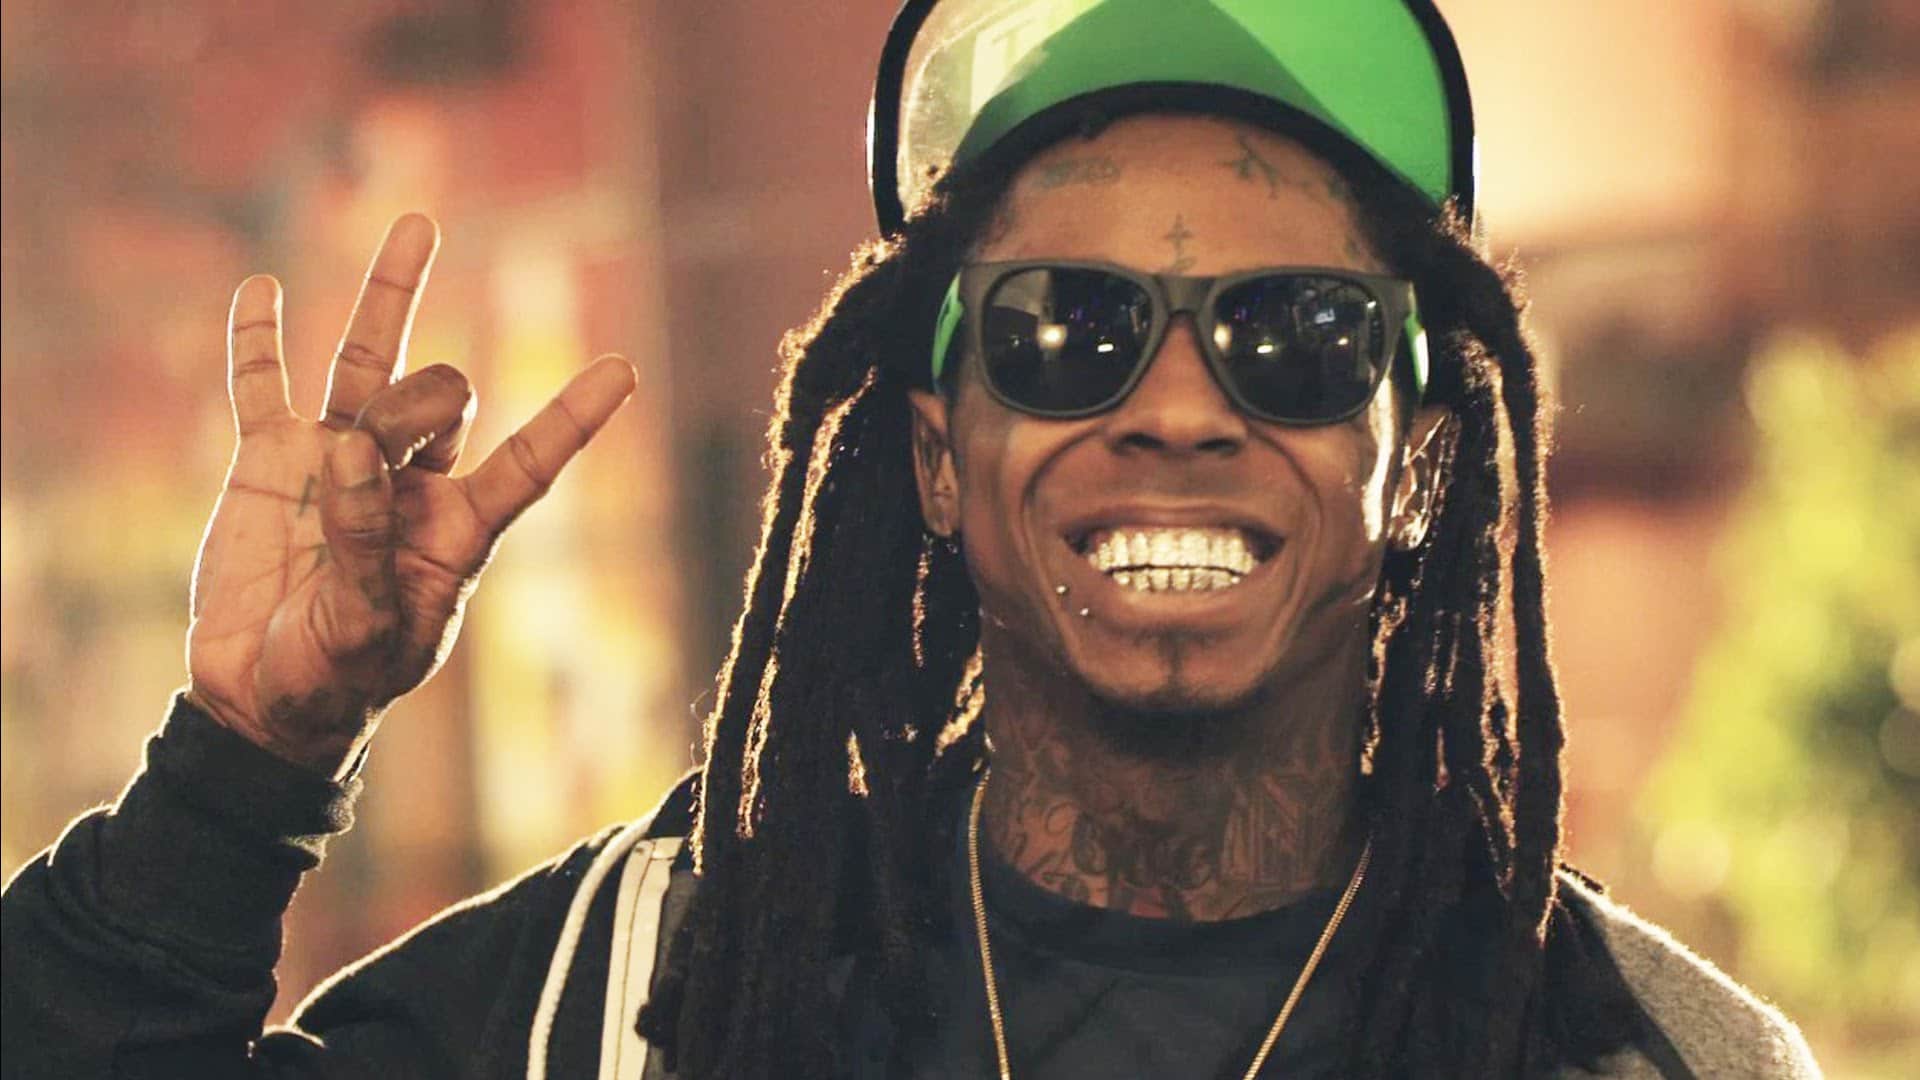 Lil Wayne annonce (enfin) la date de sortie de "Dedication 6"